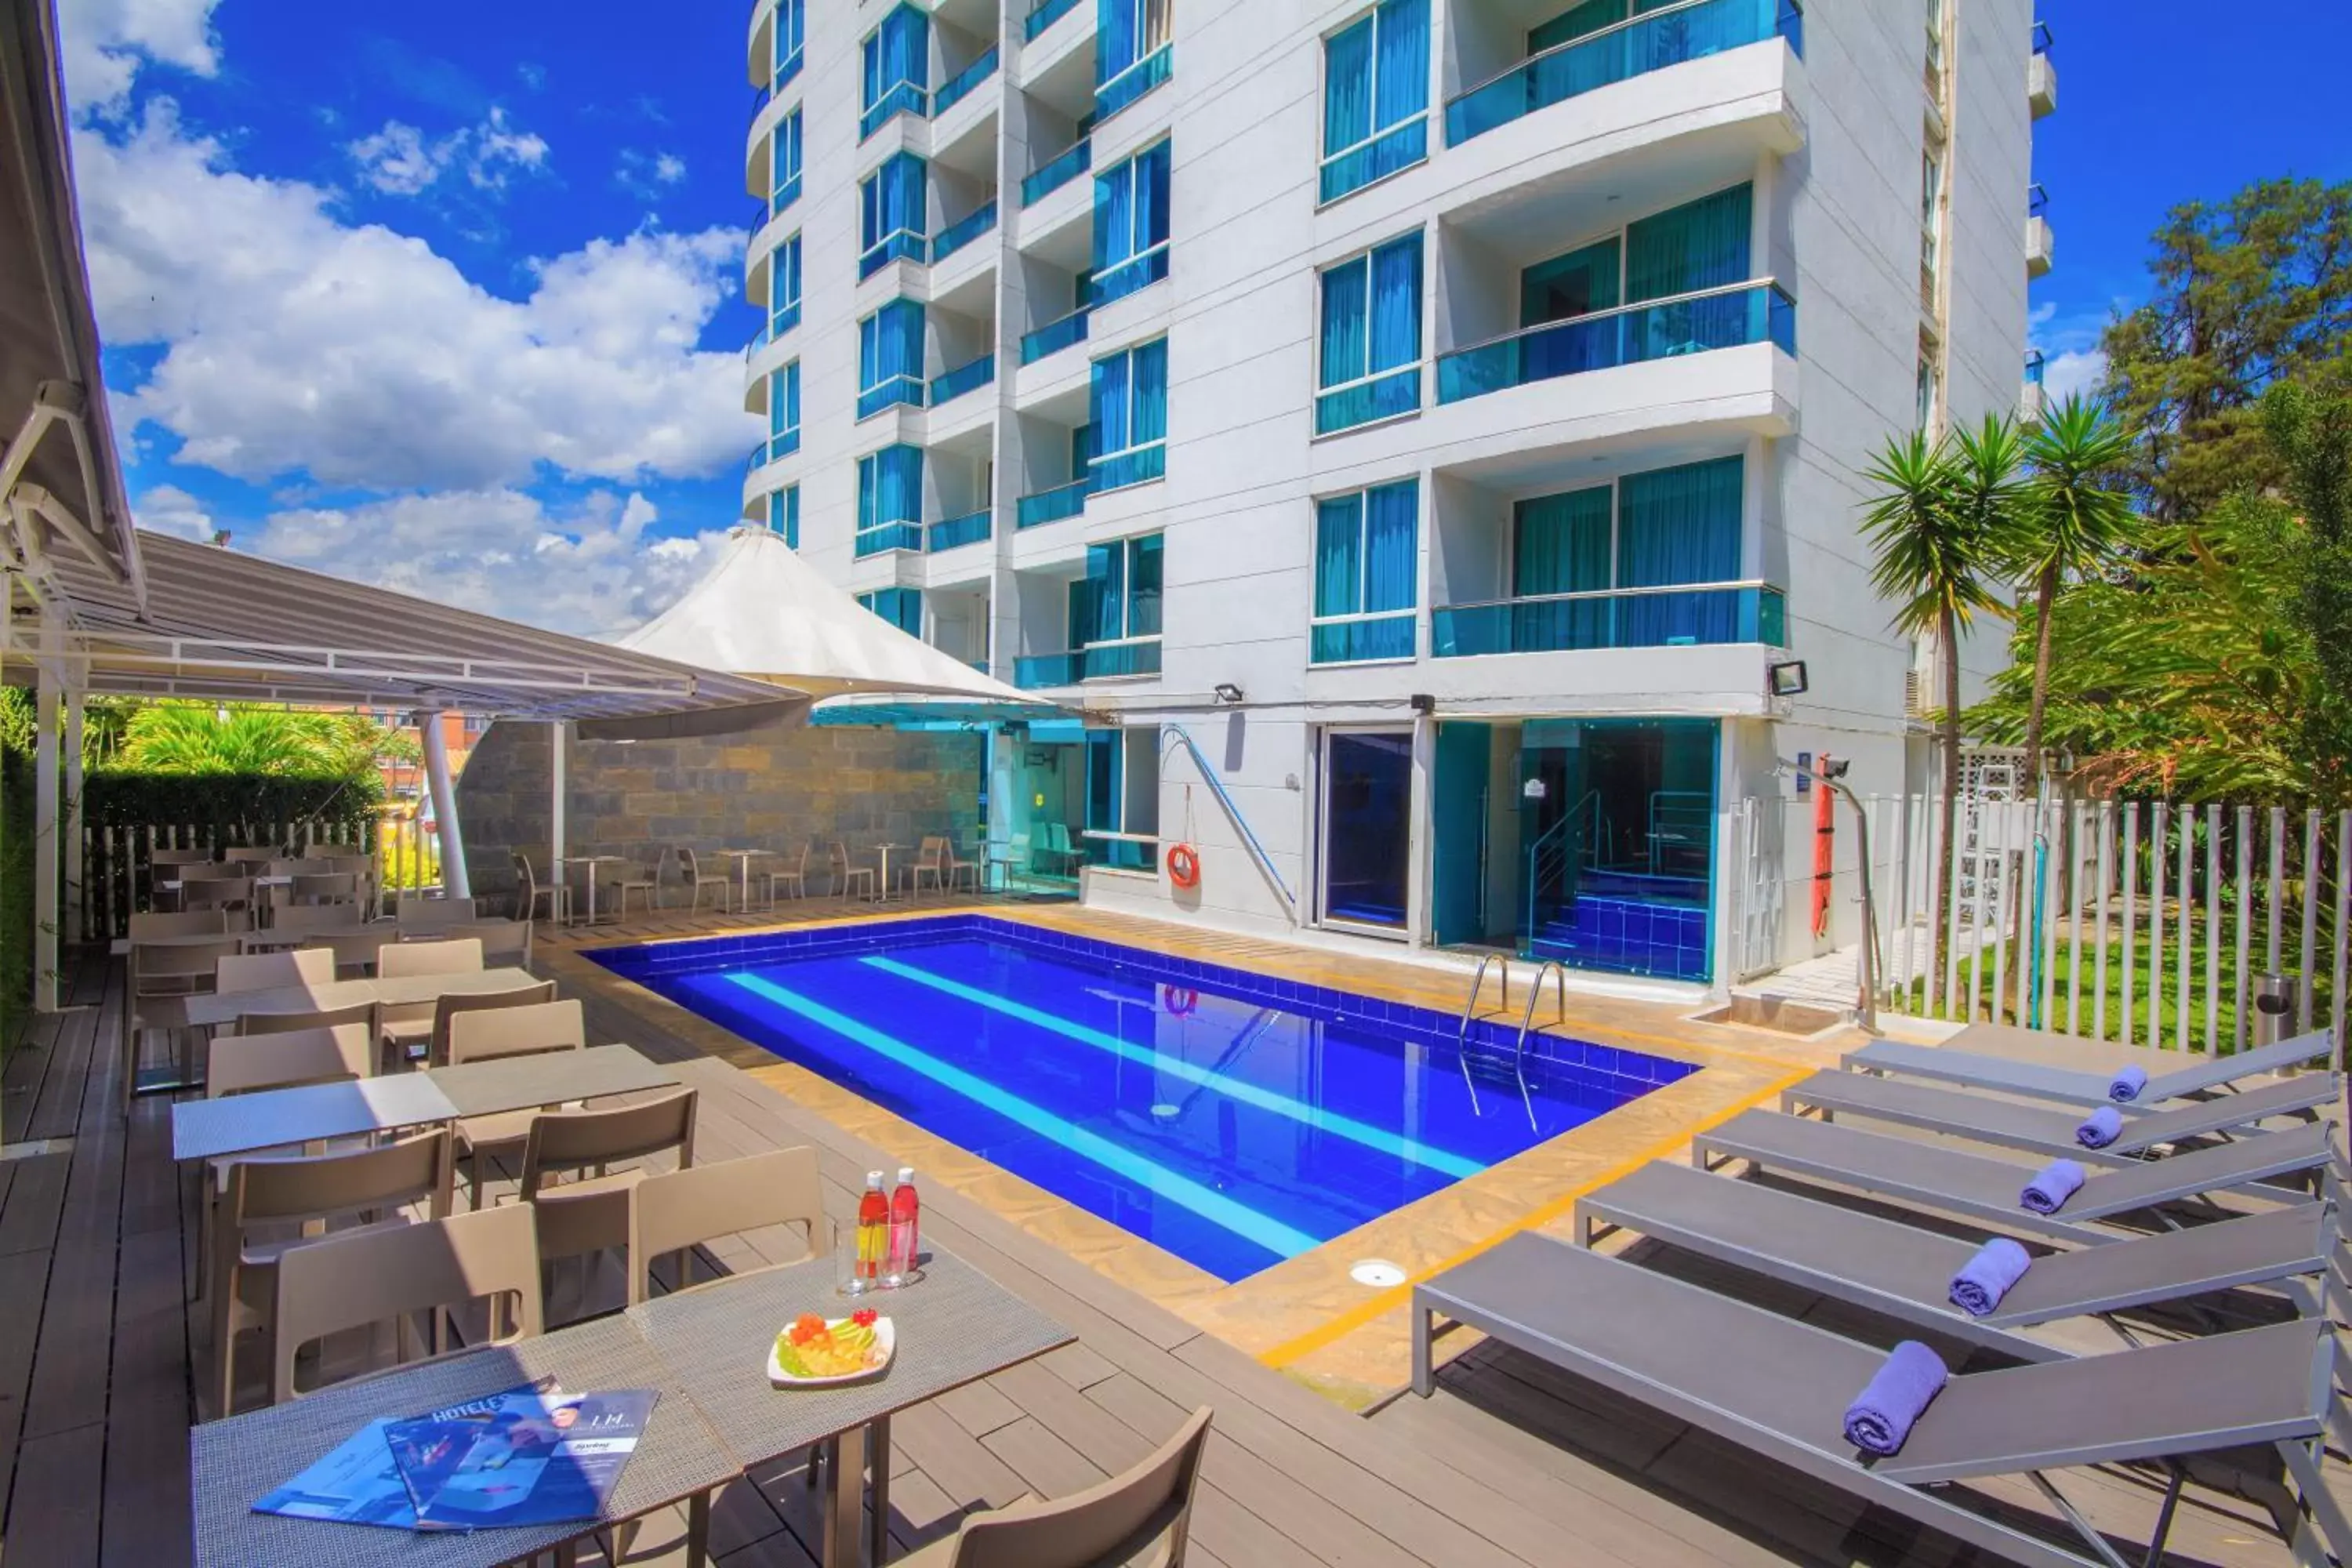 Swimming Pool in The Morgana Poblado Suites Hotel